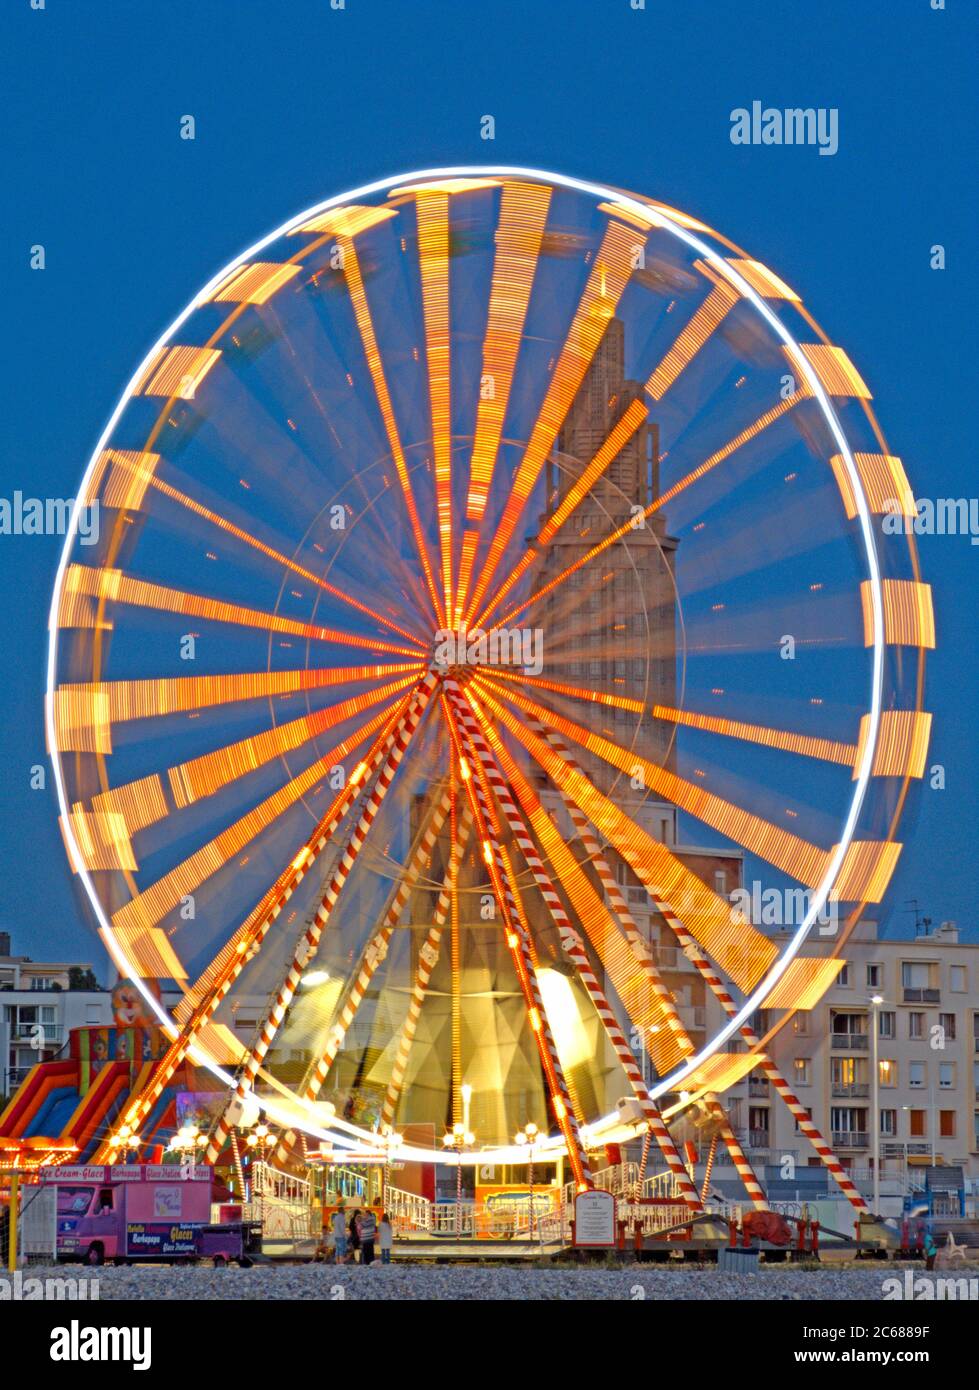 Long exposure of illuminated Ferris Wheel, Le Havre, France Stock Photo